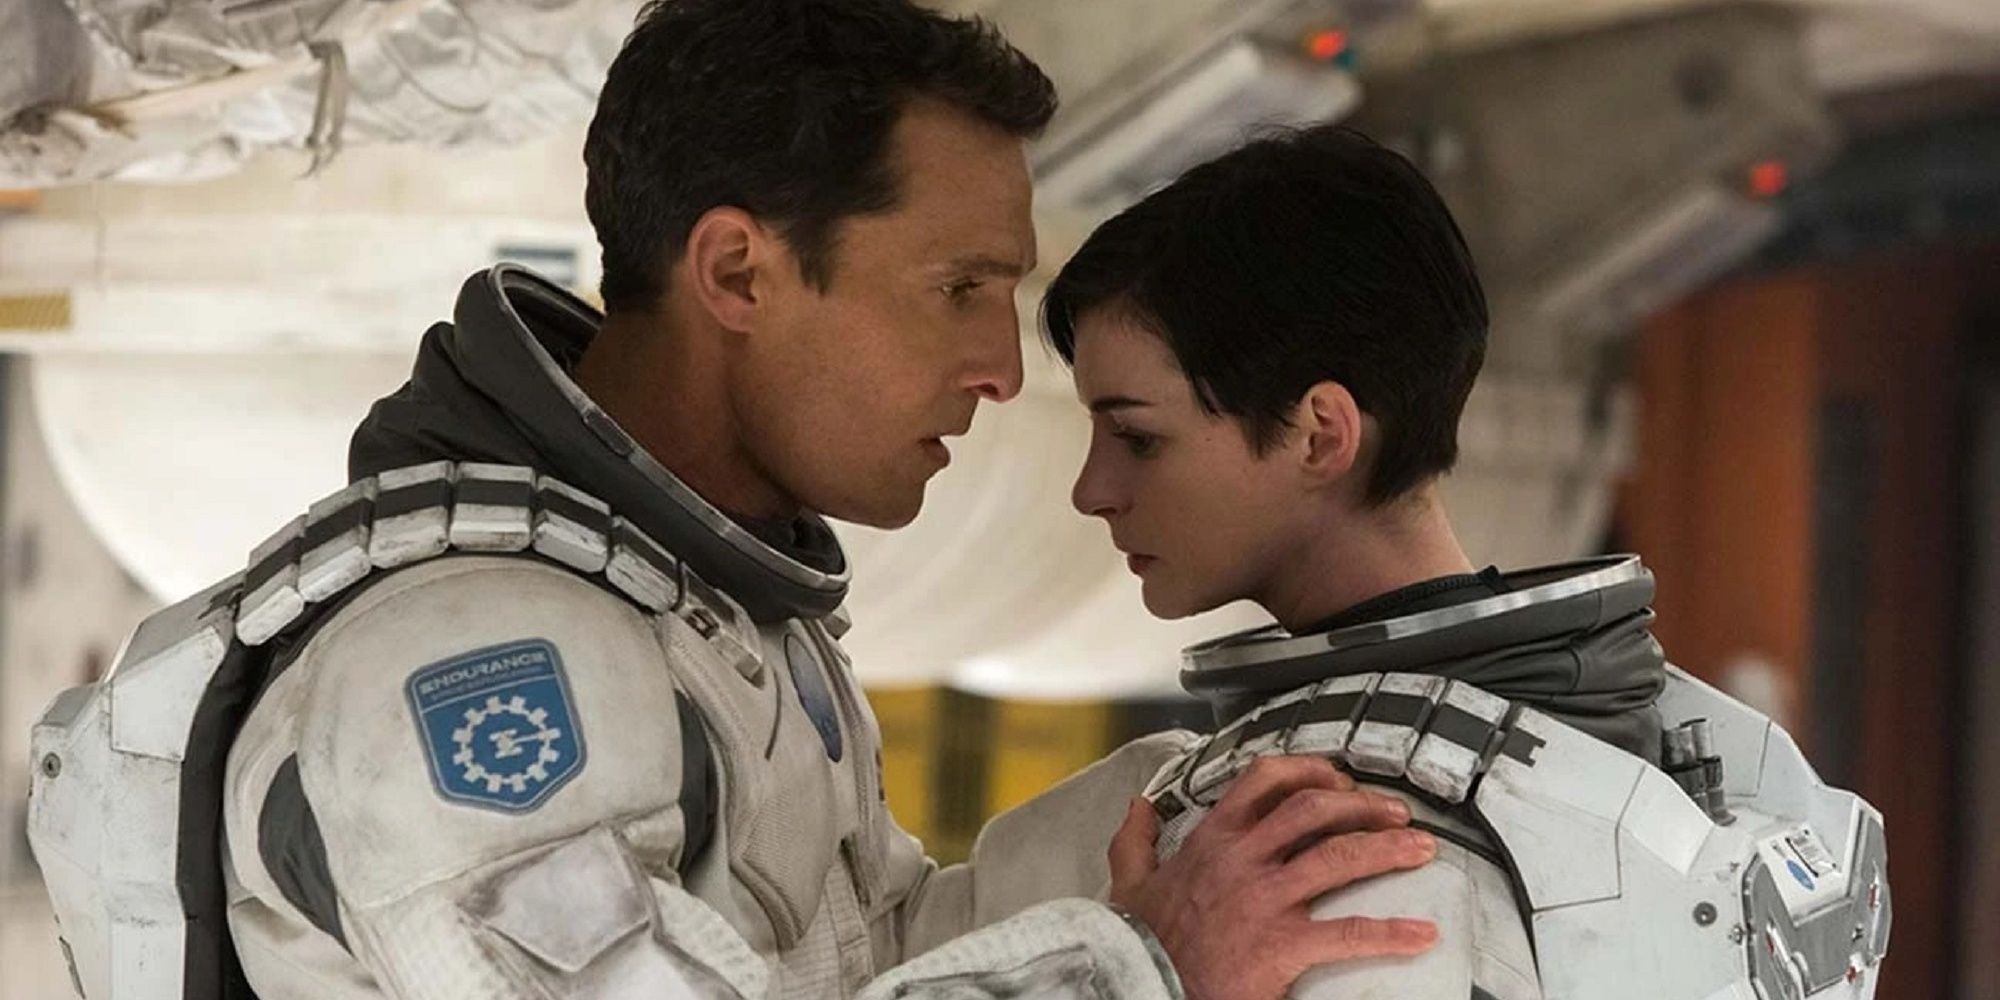 Matthew McConaughey and Anne Hathaway talking together in Interstellar.